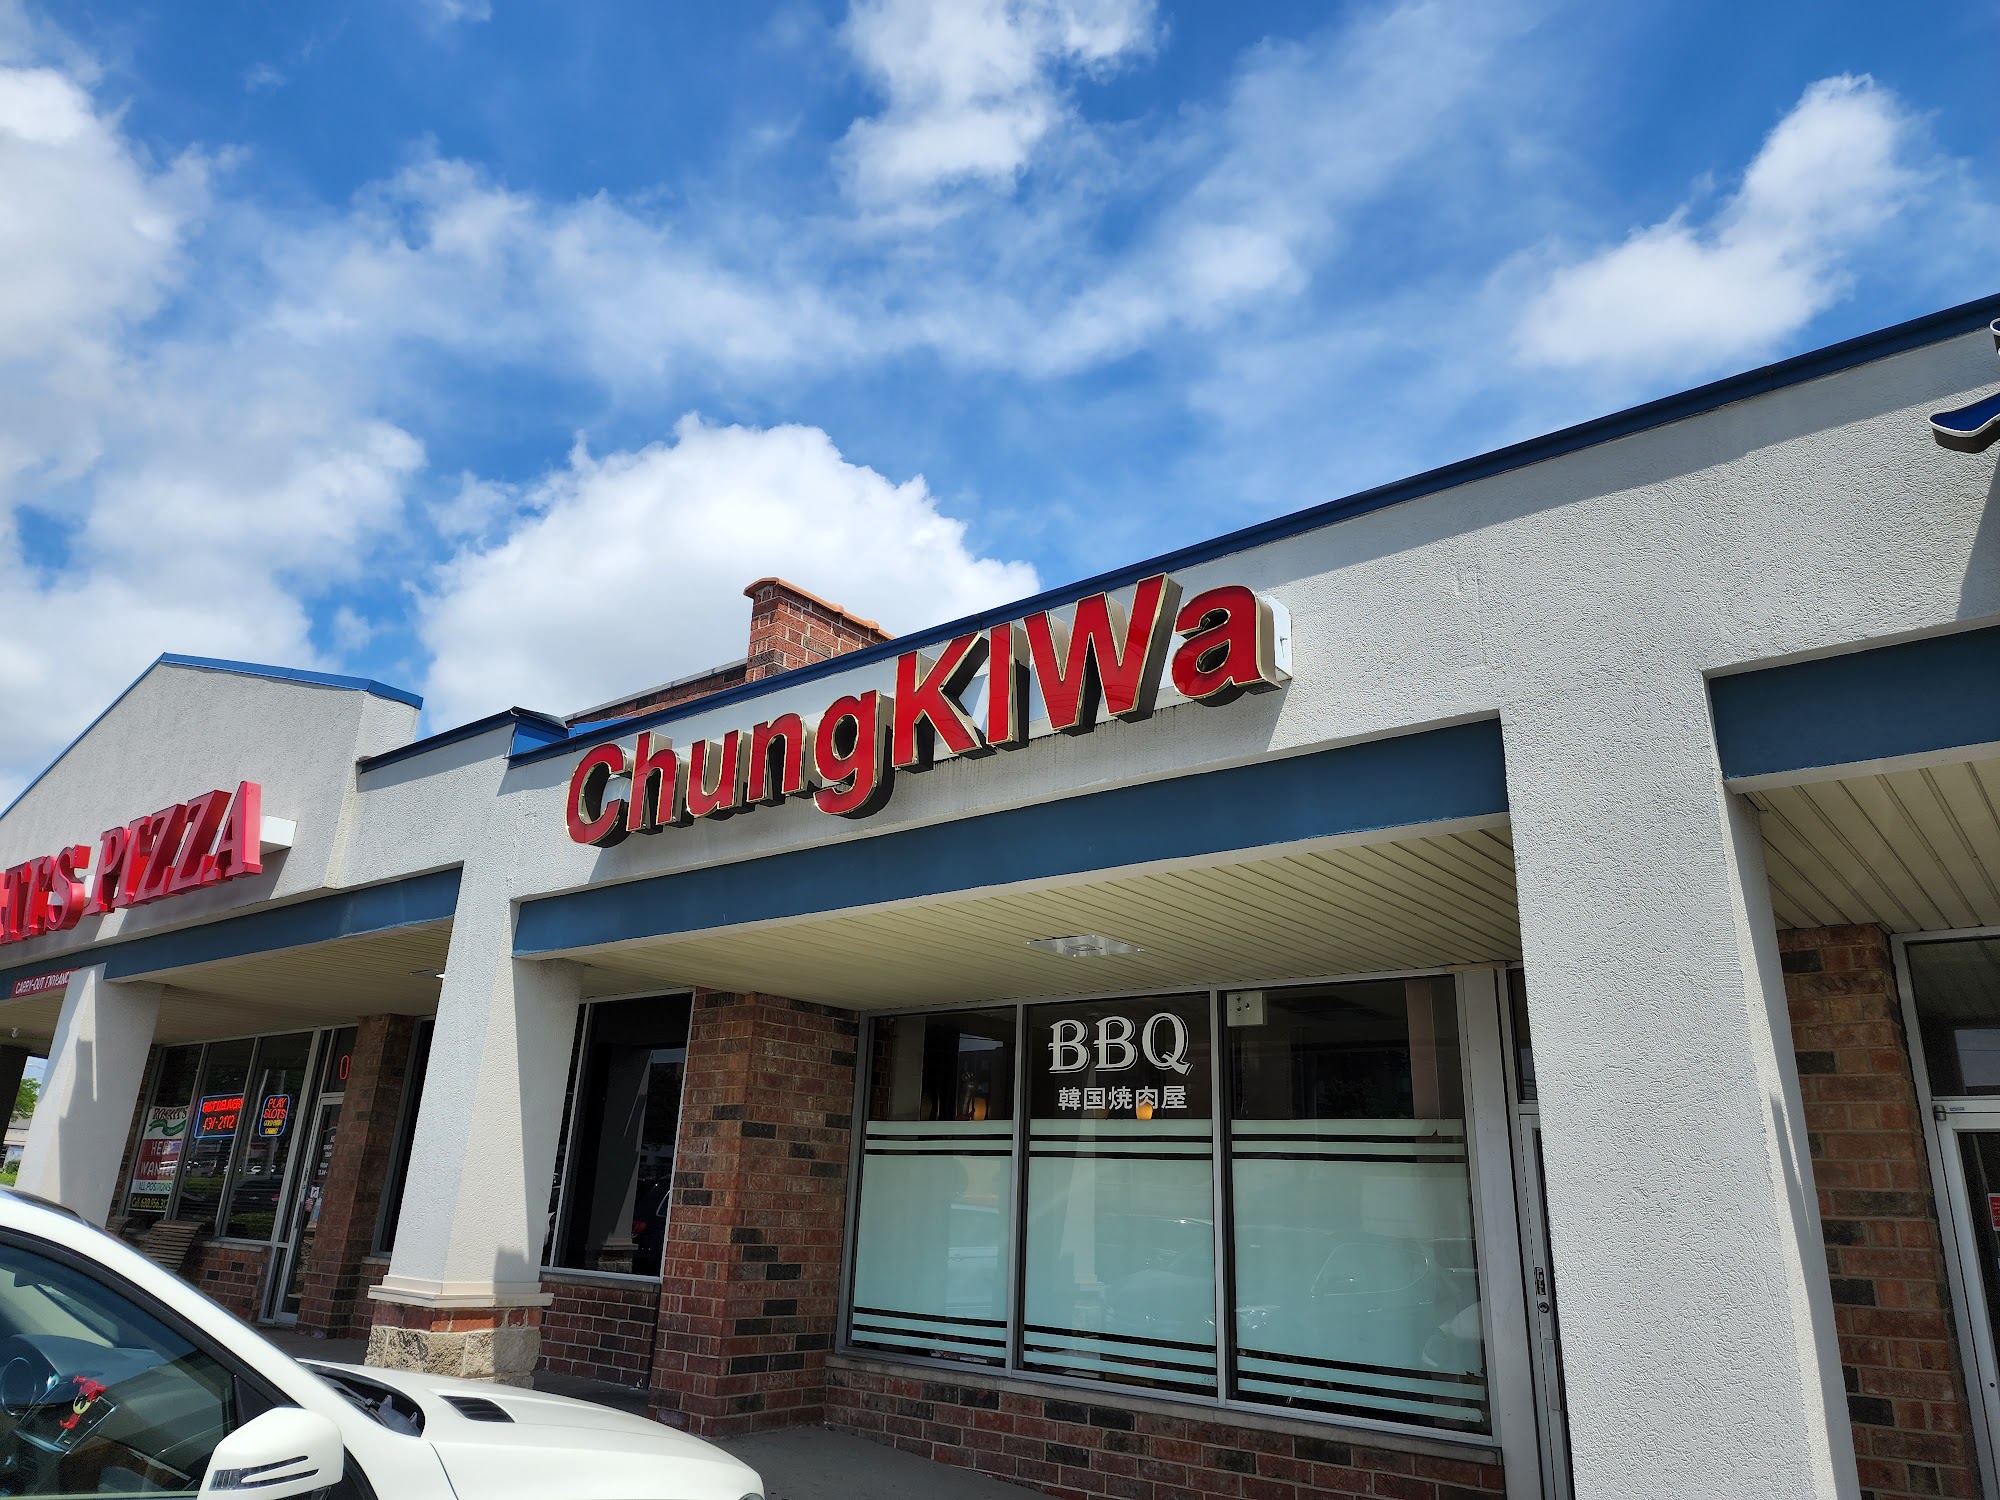 Chungkiwa Restaurant